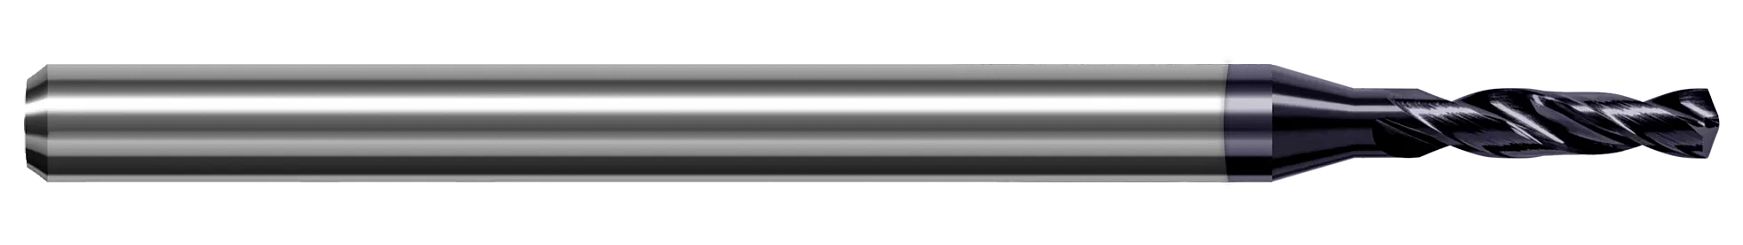 Miniature High Performance Drills-Prehardened Steels-Metric